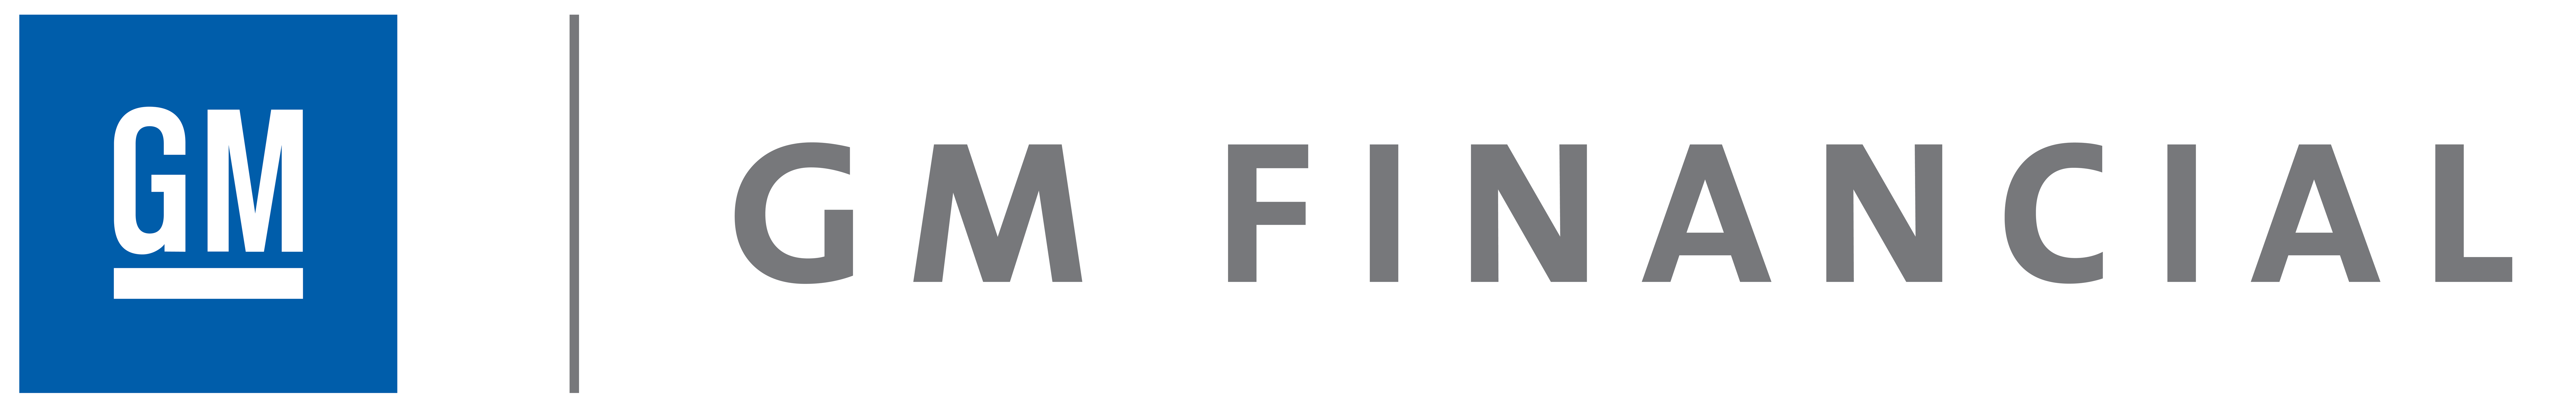 GM Financial Company Logo